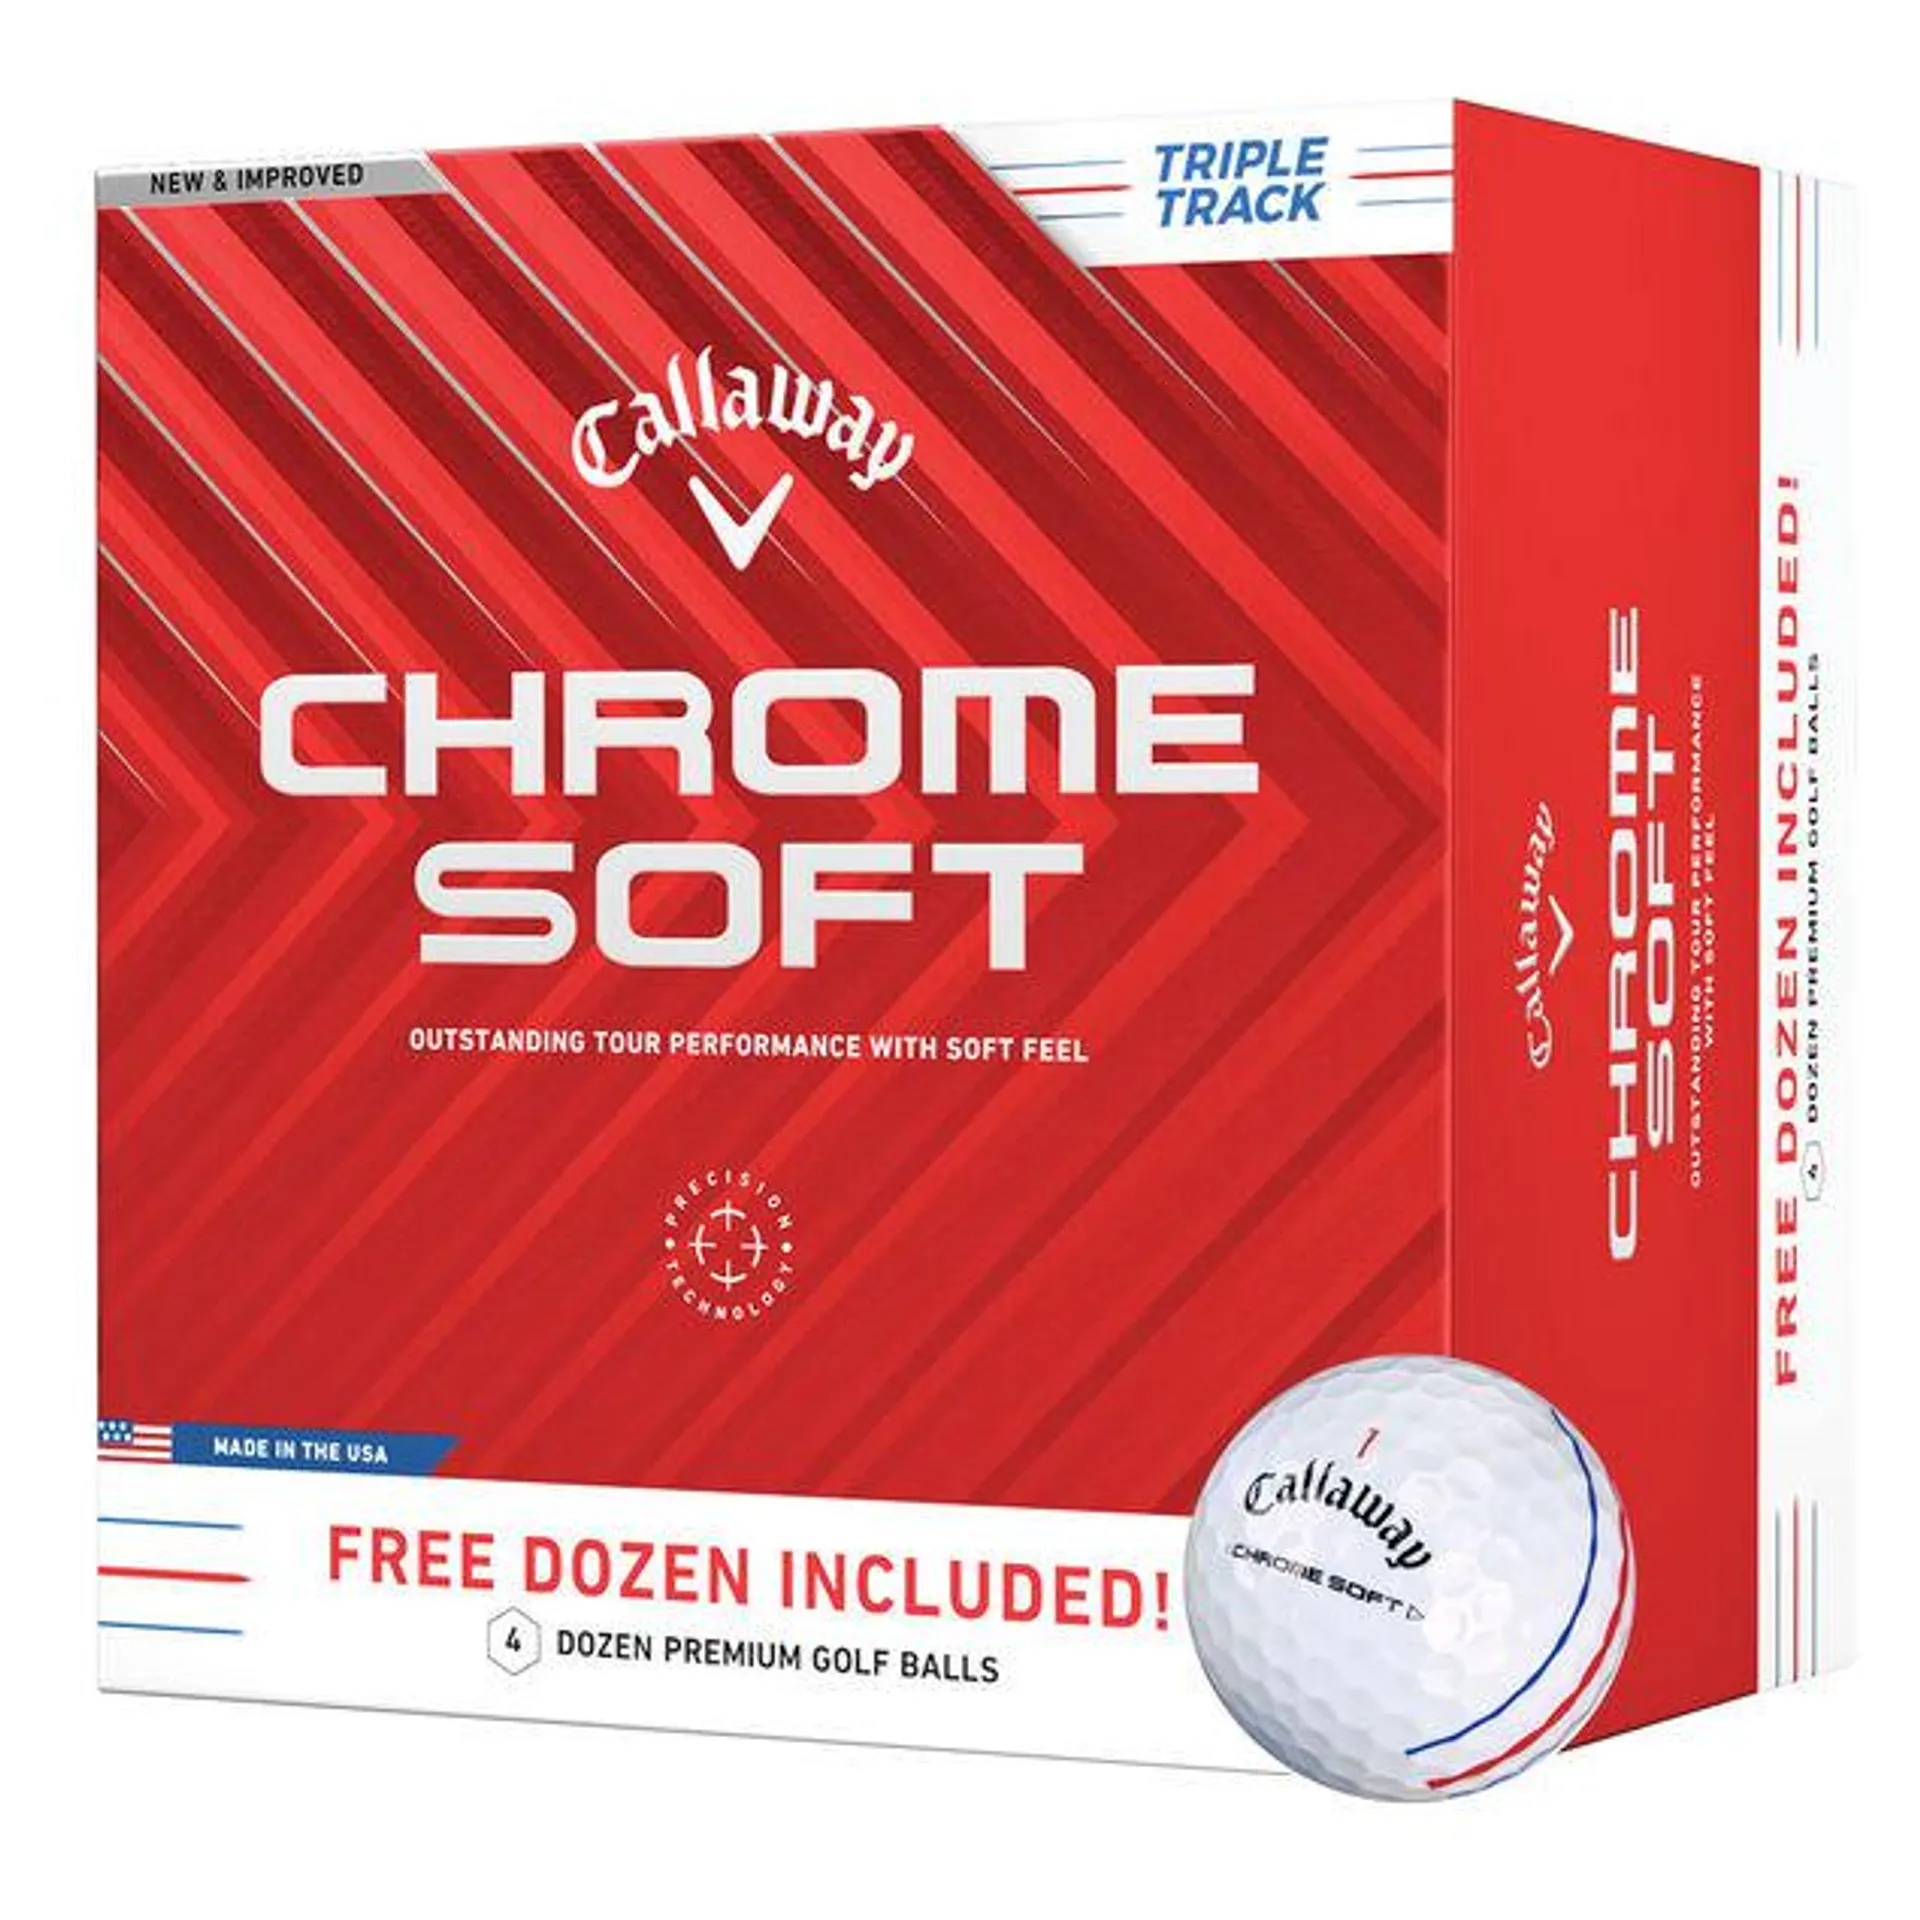 Callaway Chrome Soft Triple Track 4 for 3 Golf Ball Pack